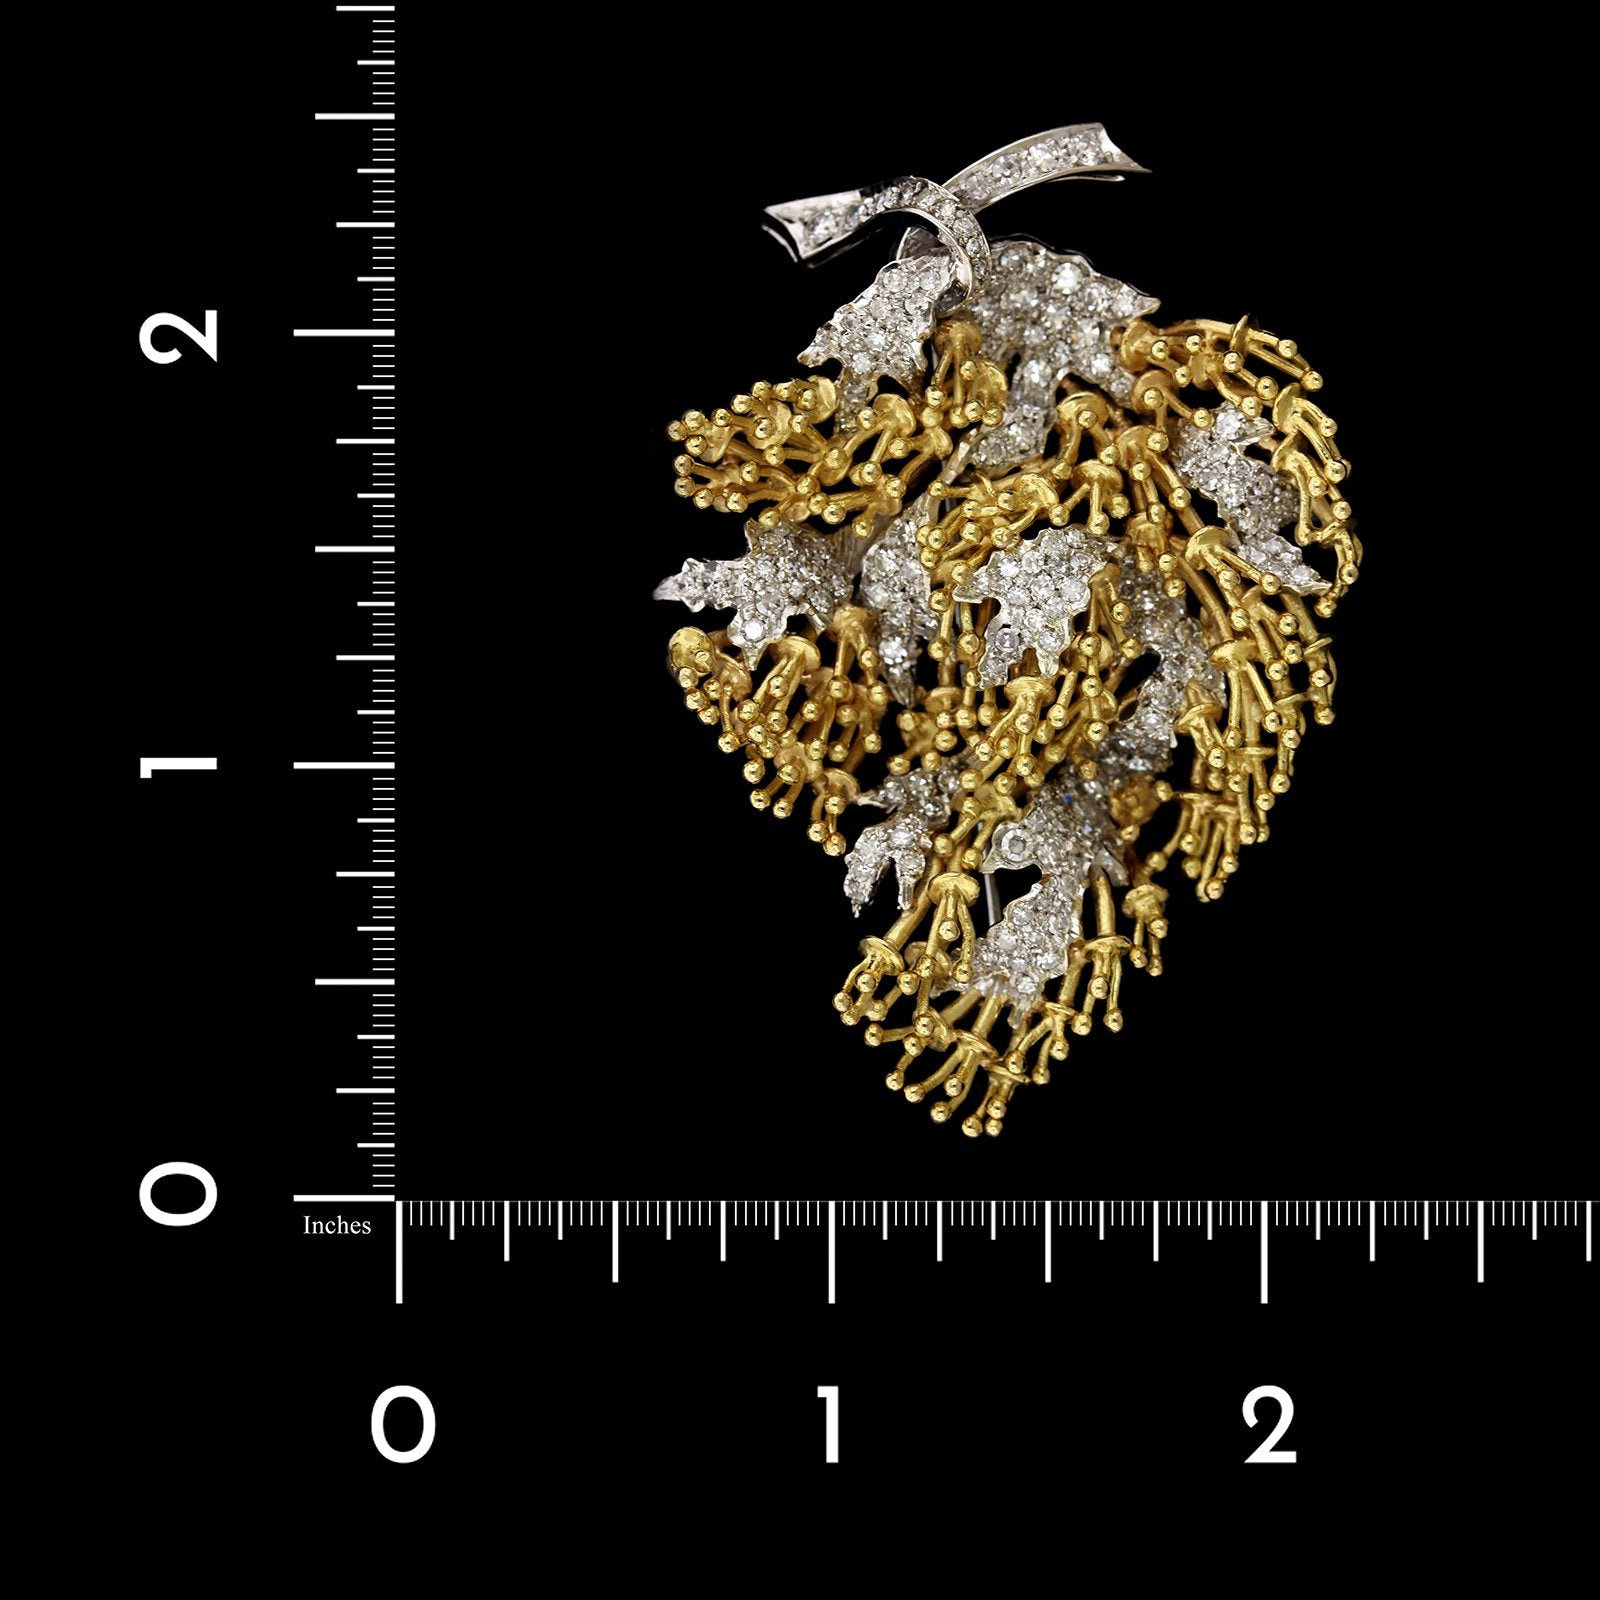 18K Two-tone Gold Estate Diamond Brooch